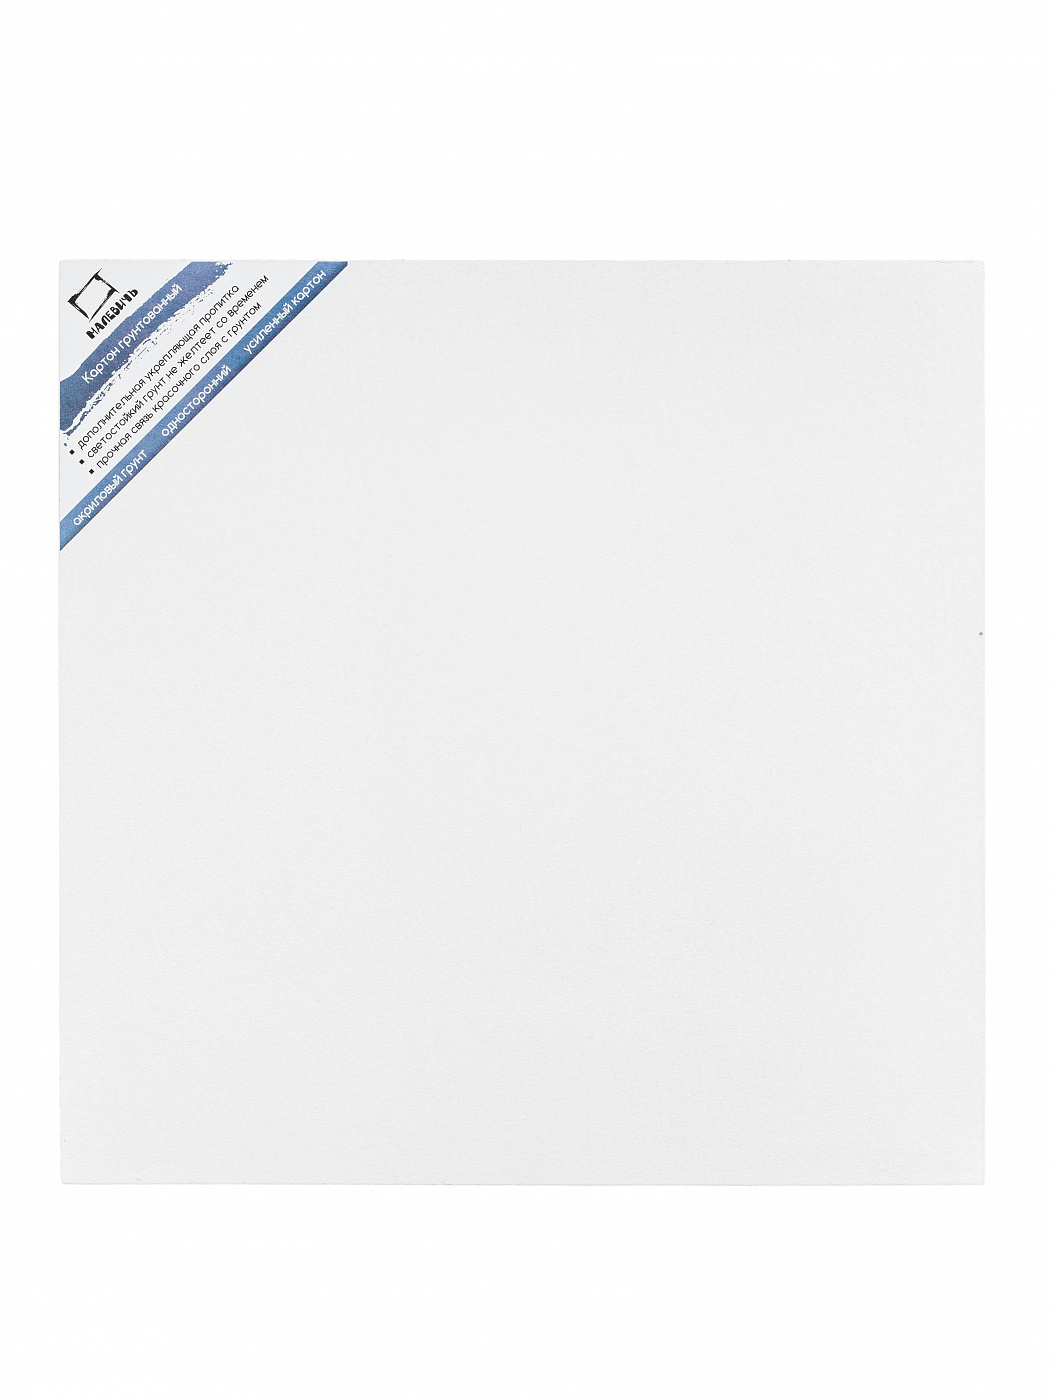 Картон грунтованный односторонний Малевичъ 30х30 см картон белый а4 calligrata 40 листов 190 г м2 немелованный односторонний